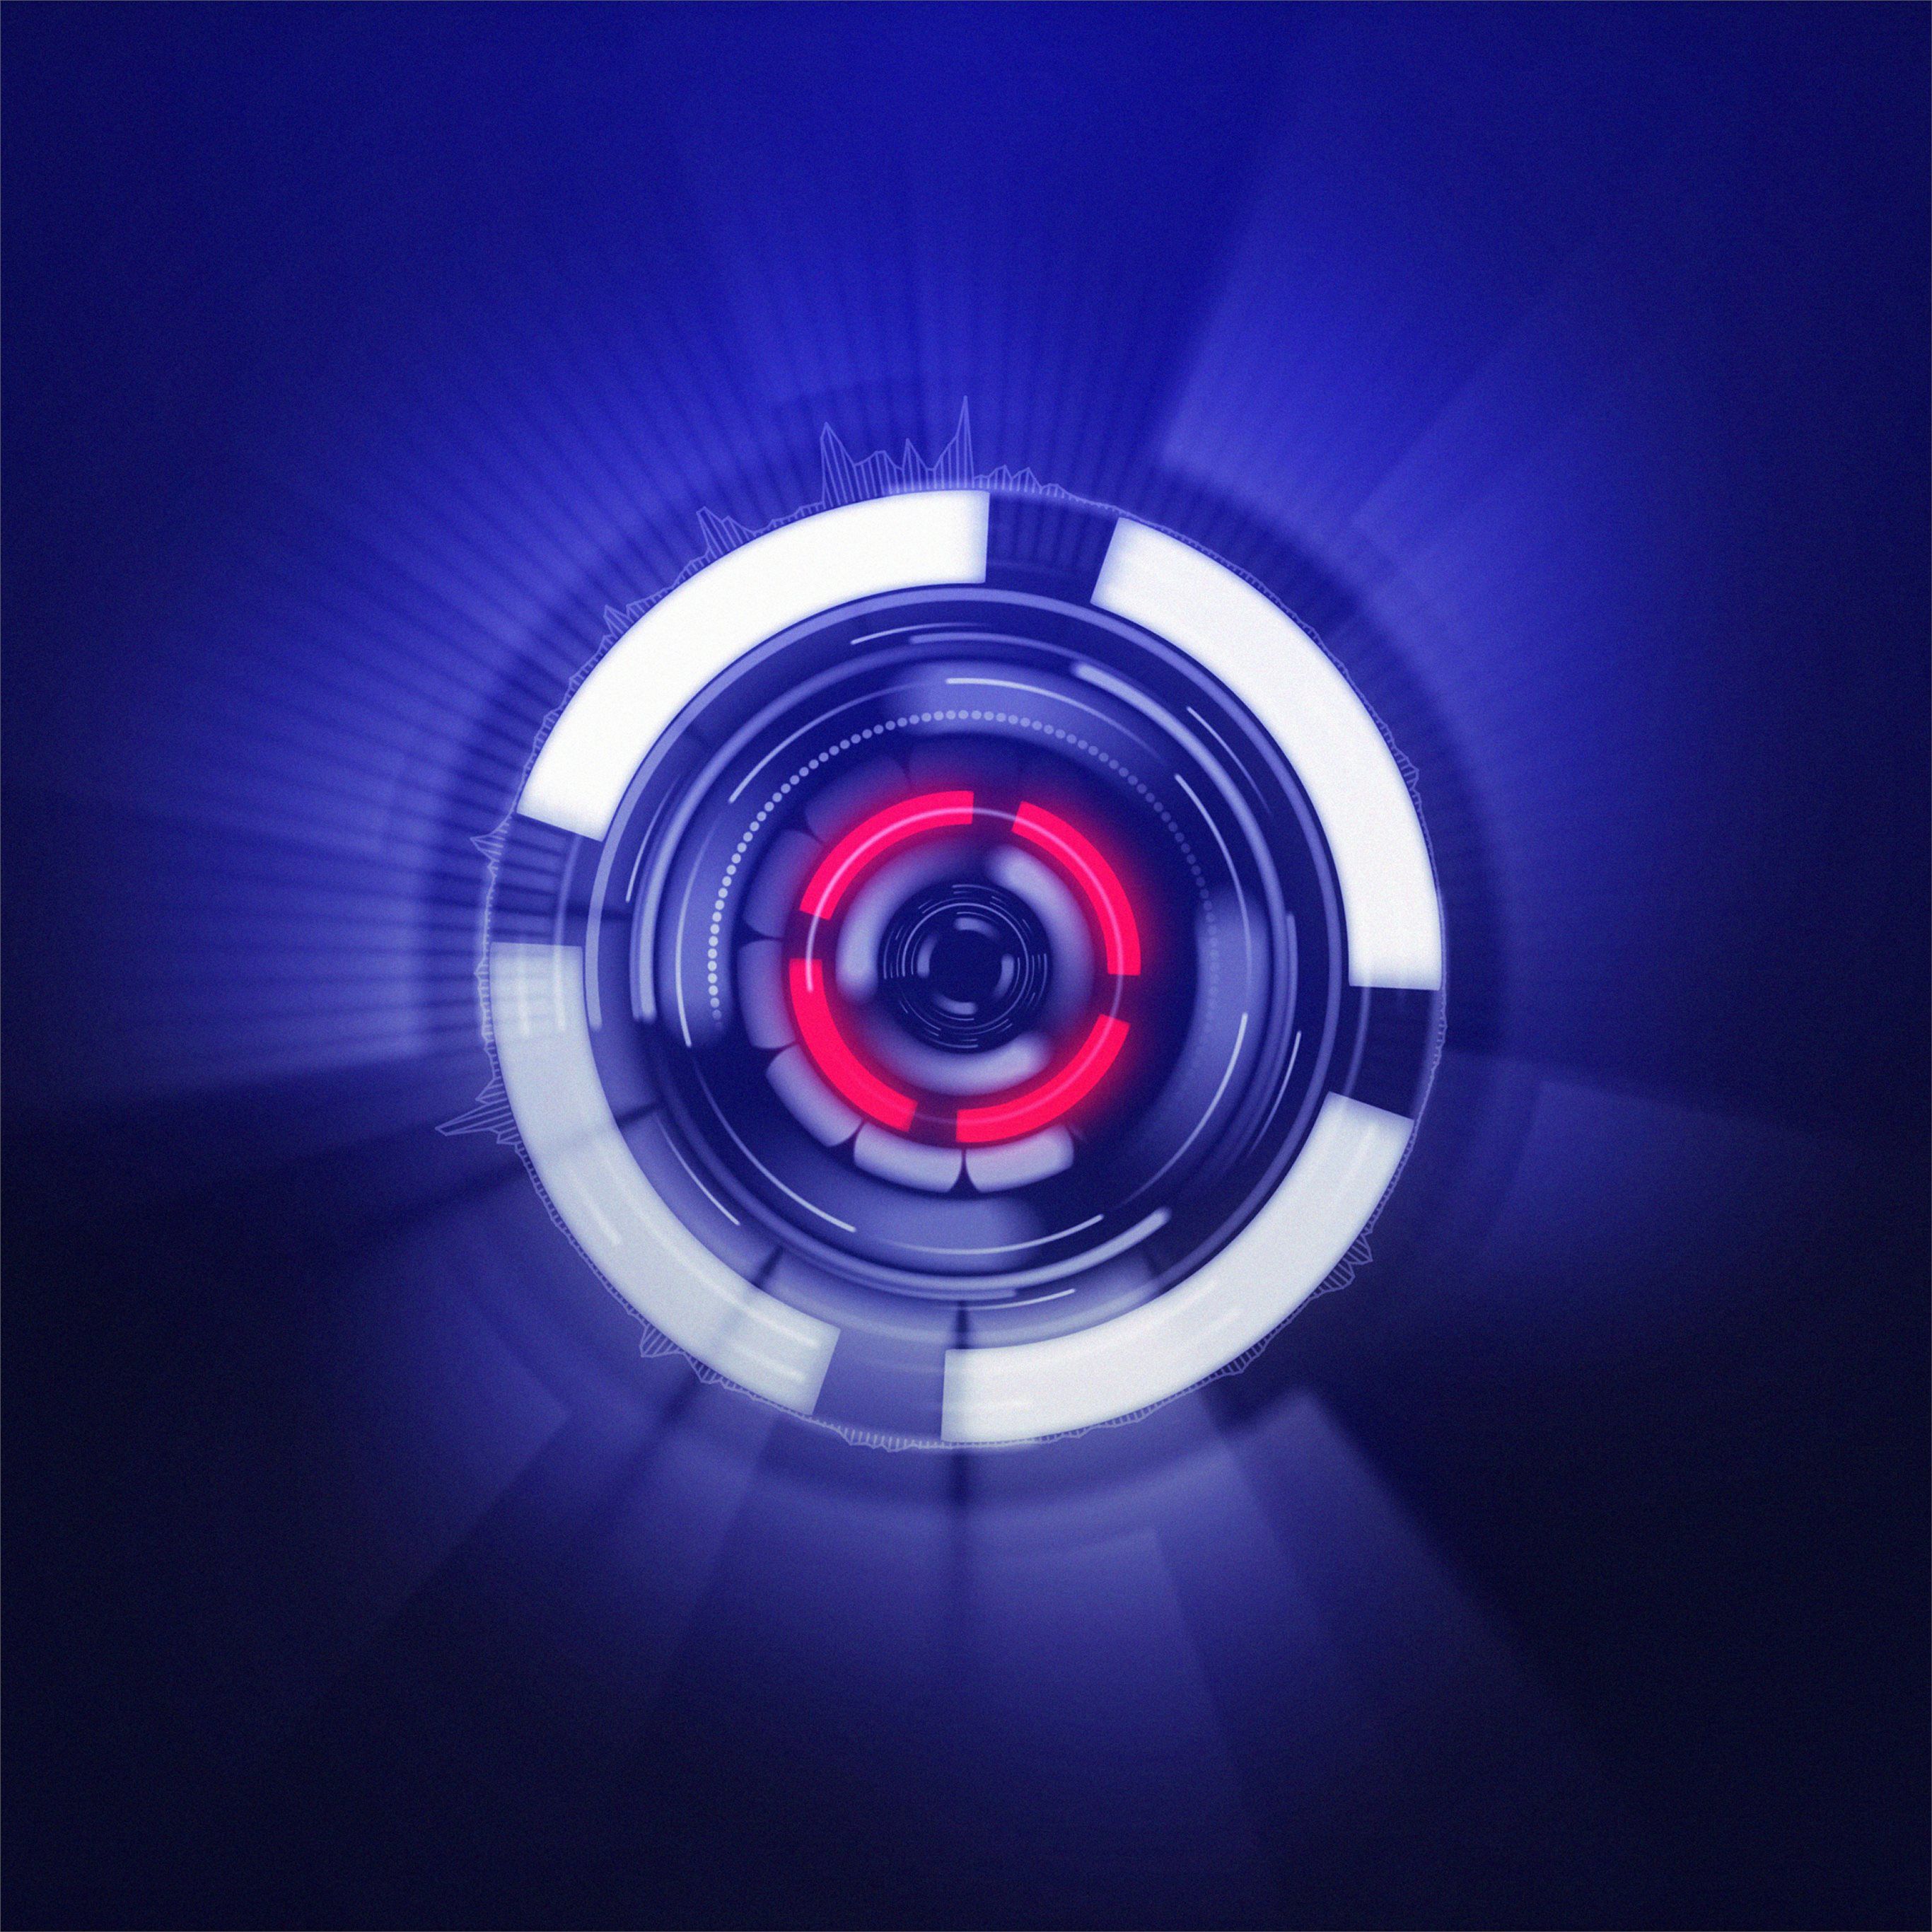 neon sphere red blue purple 4k iPad Air Wallpaper Free Download